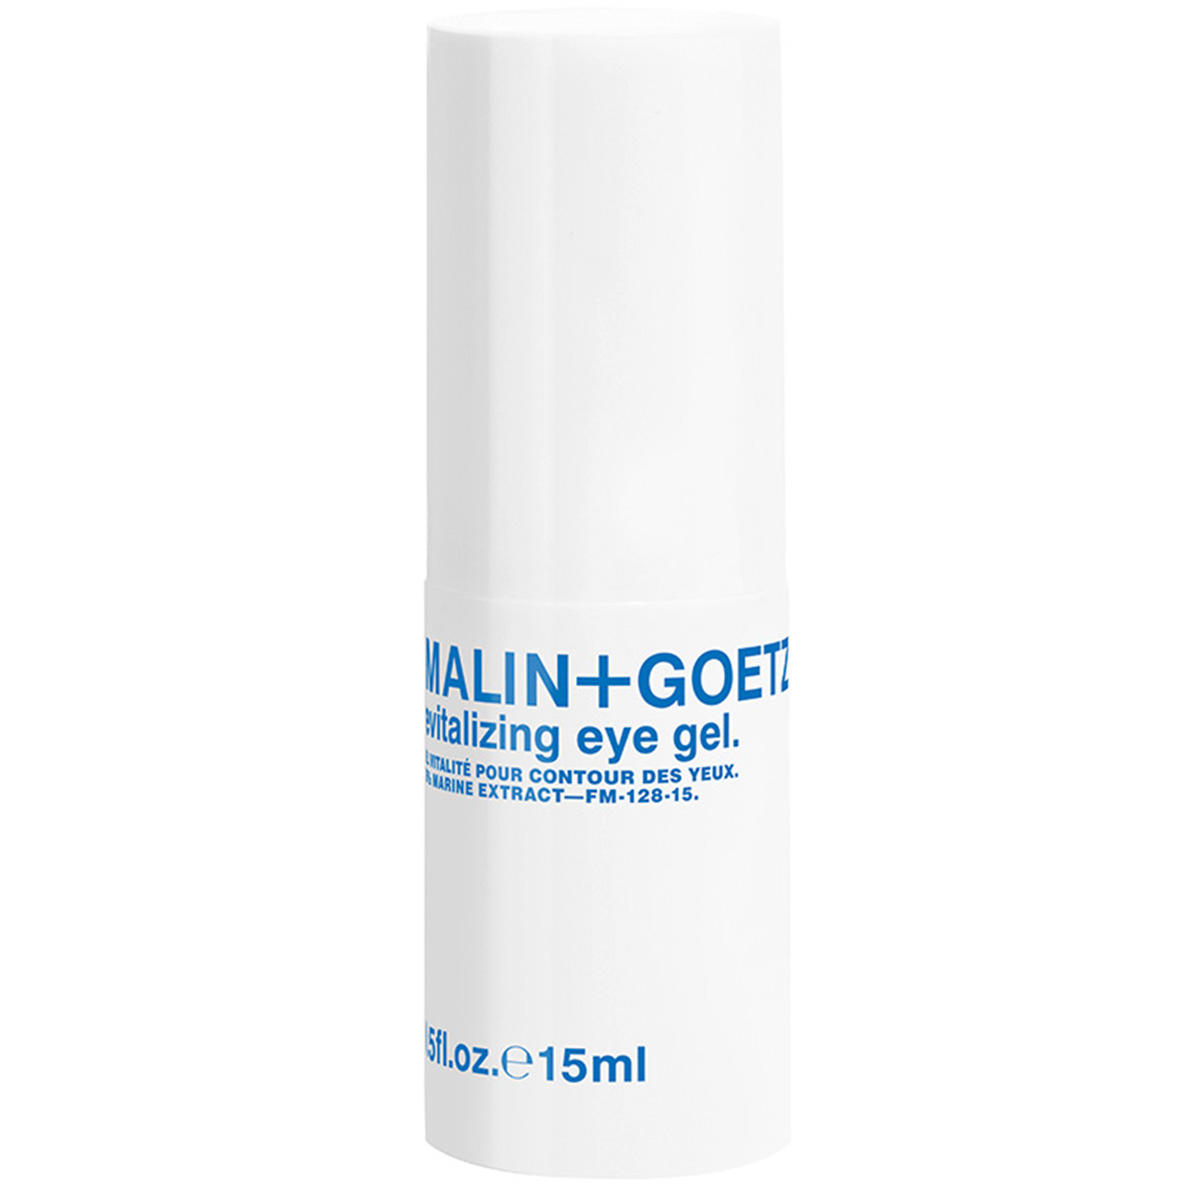 (MALIN+GOETZ) Revitalizing Eye Gel 15 ml - 1